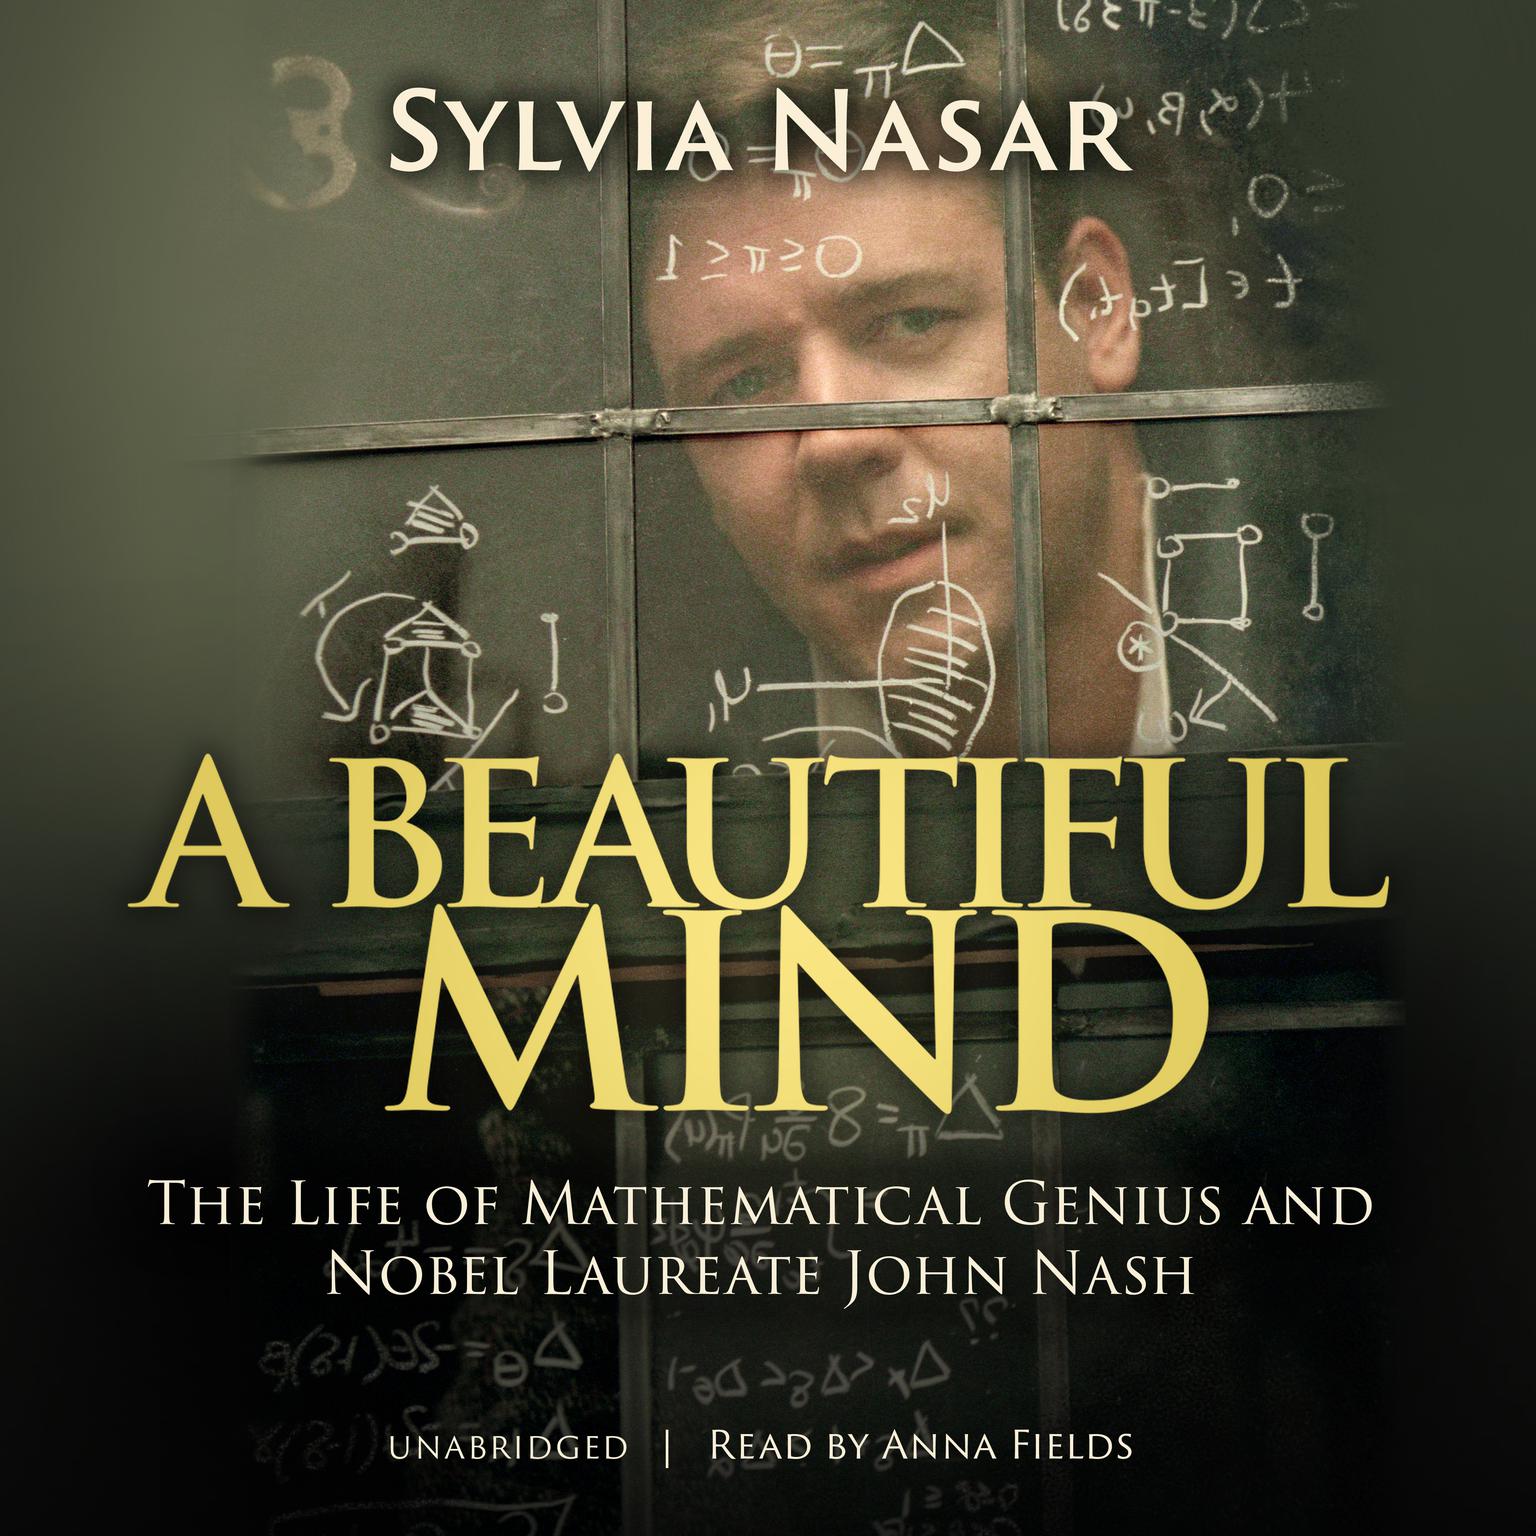 a beautiful mind by sylvia nasar pdf free download